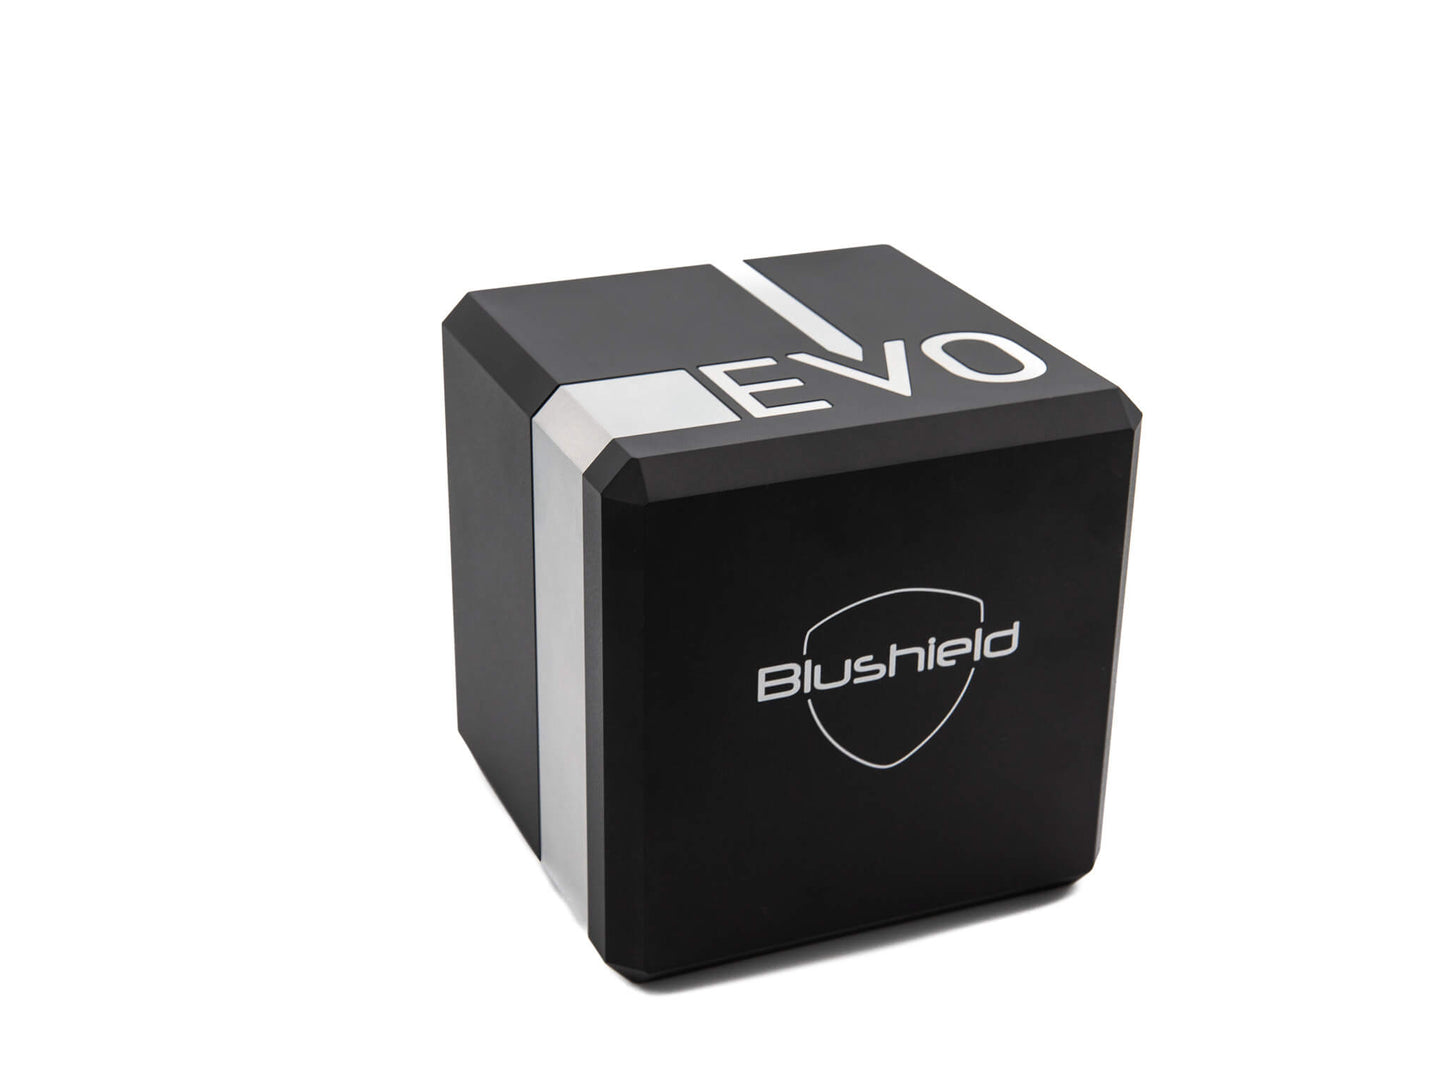 
                  
                    EVO Cube
                  
                